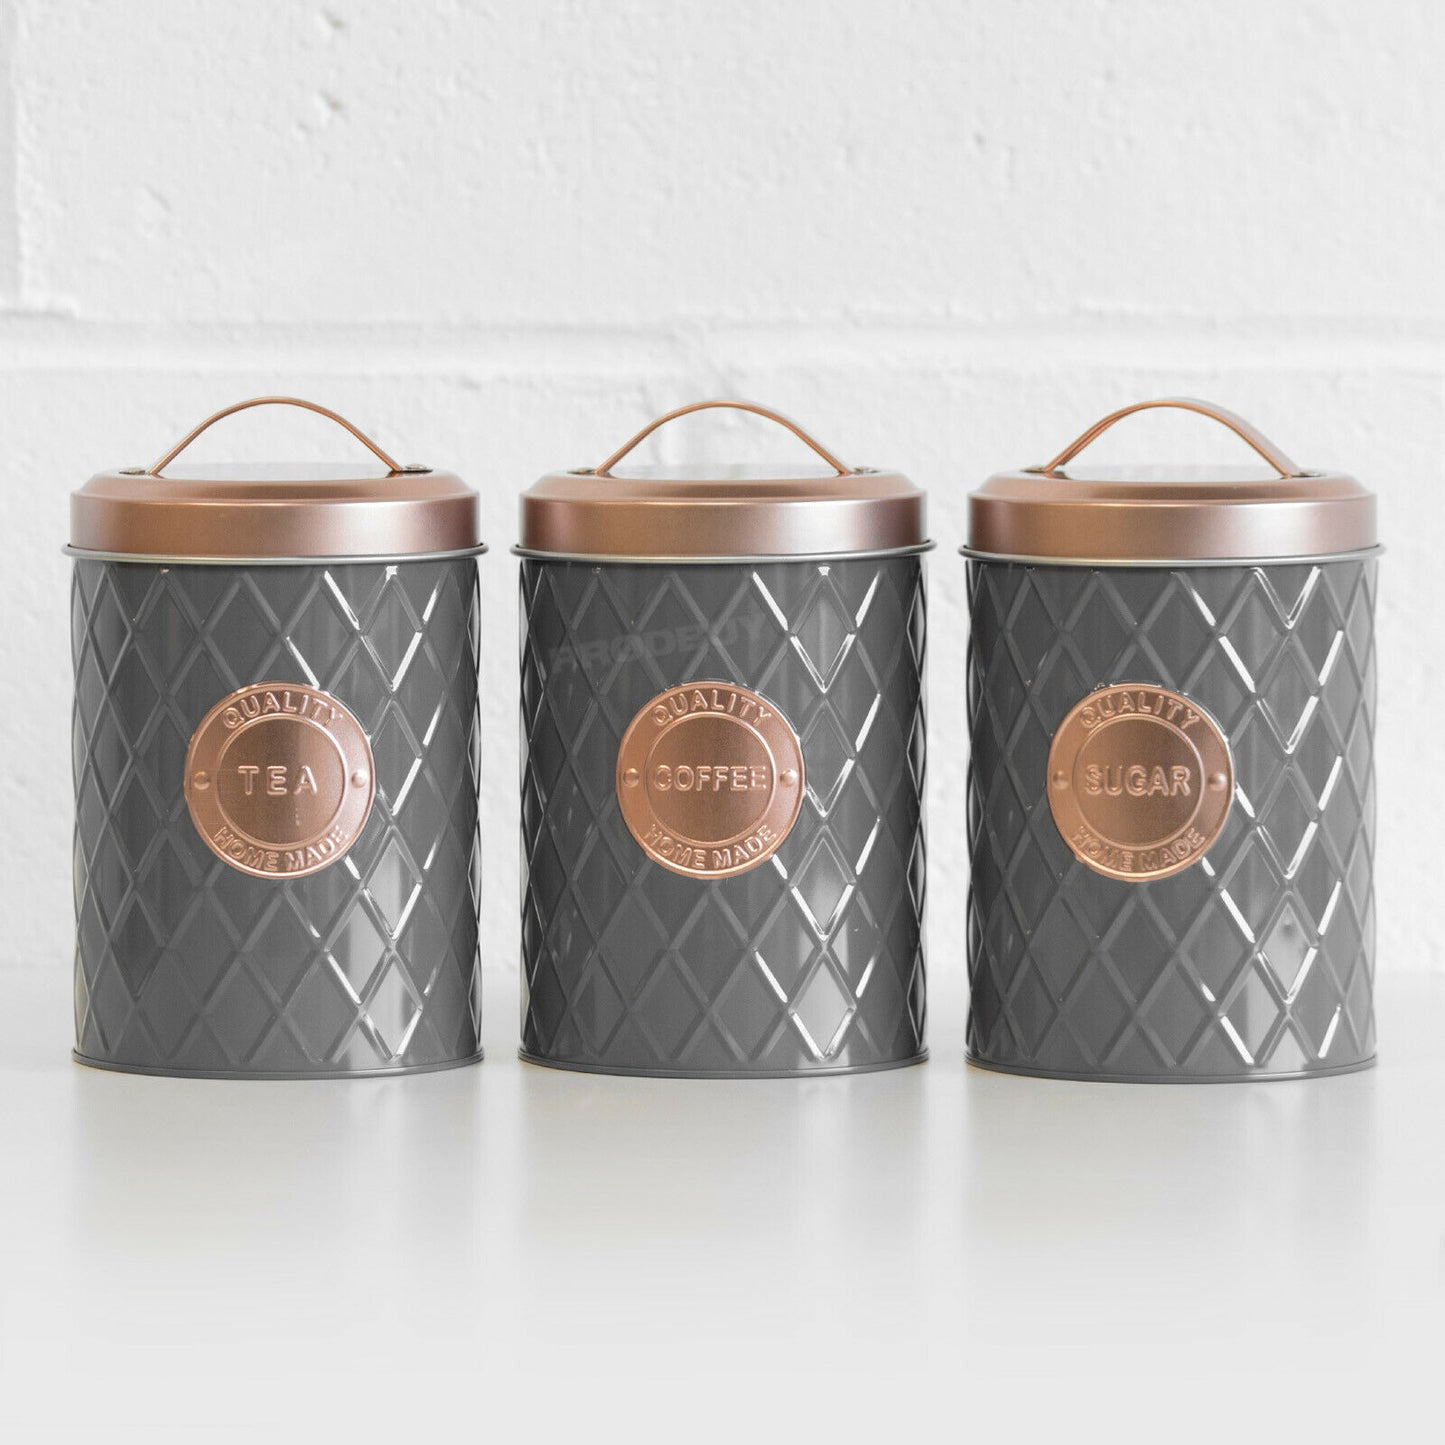 Tea Coffee Sugar Canisters Grey & Copper 17cm Tall